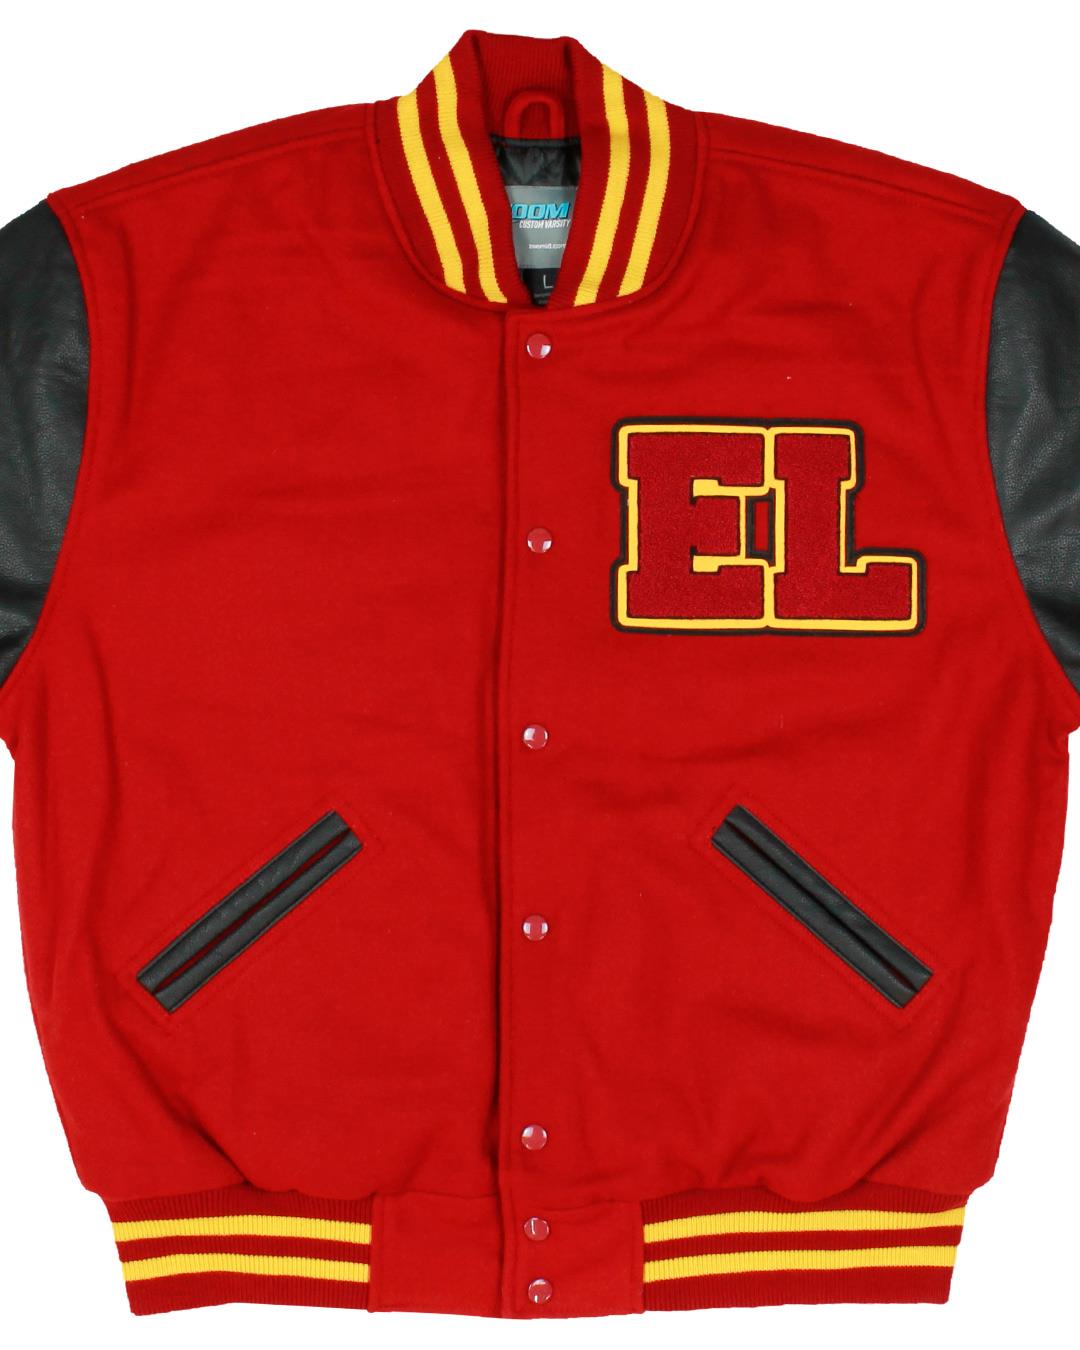 East Limestone High School Letterman Jacket, Athens, AL - Front